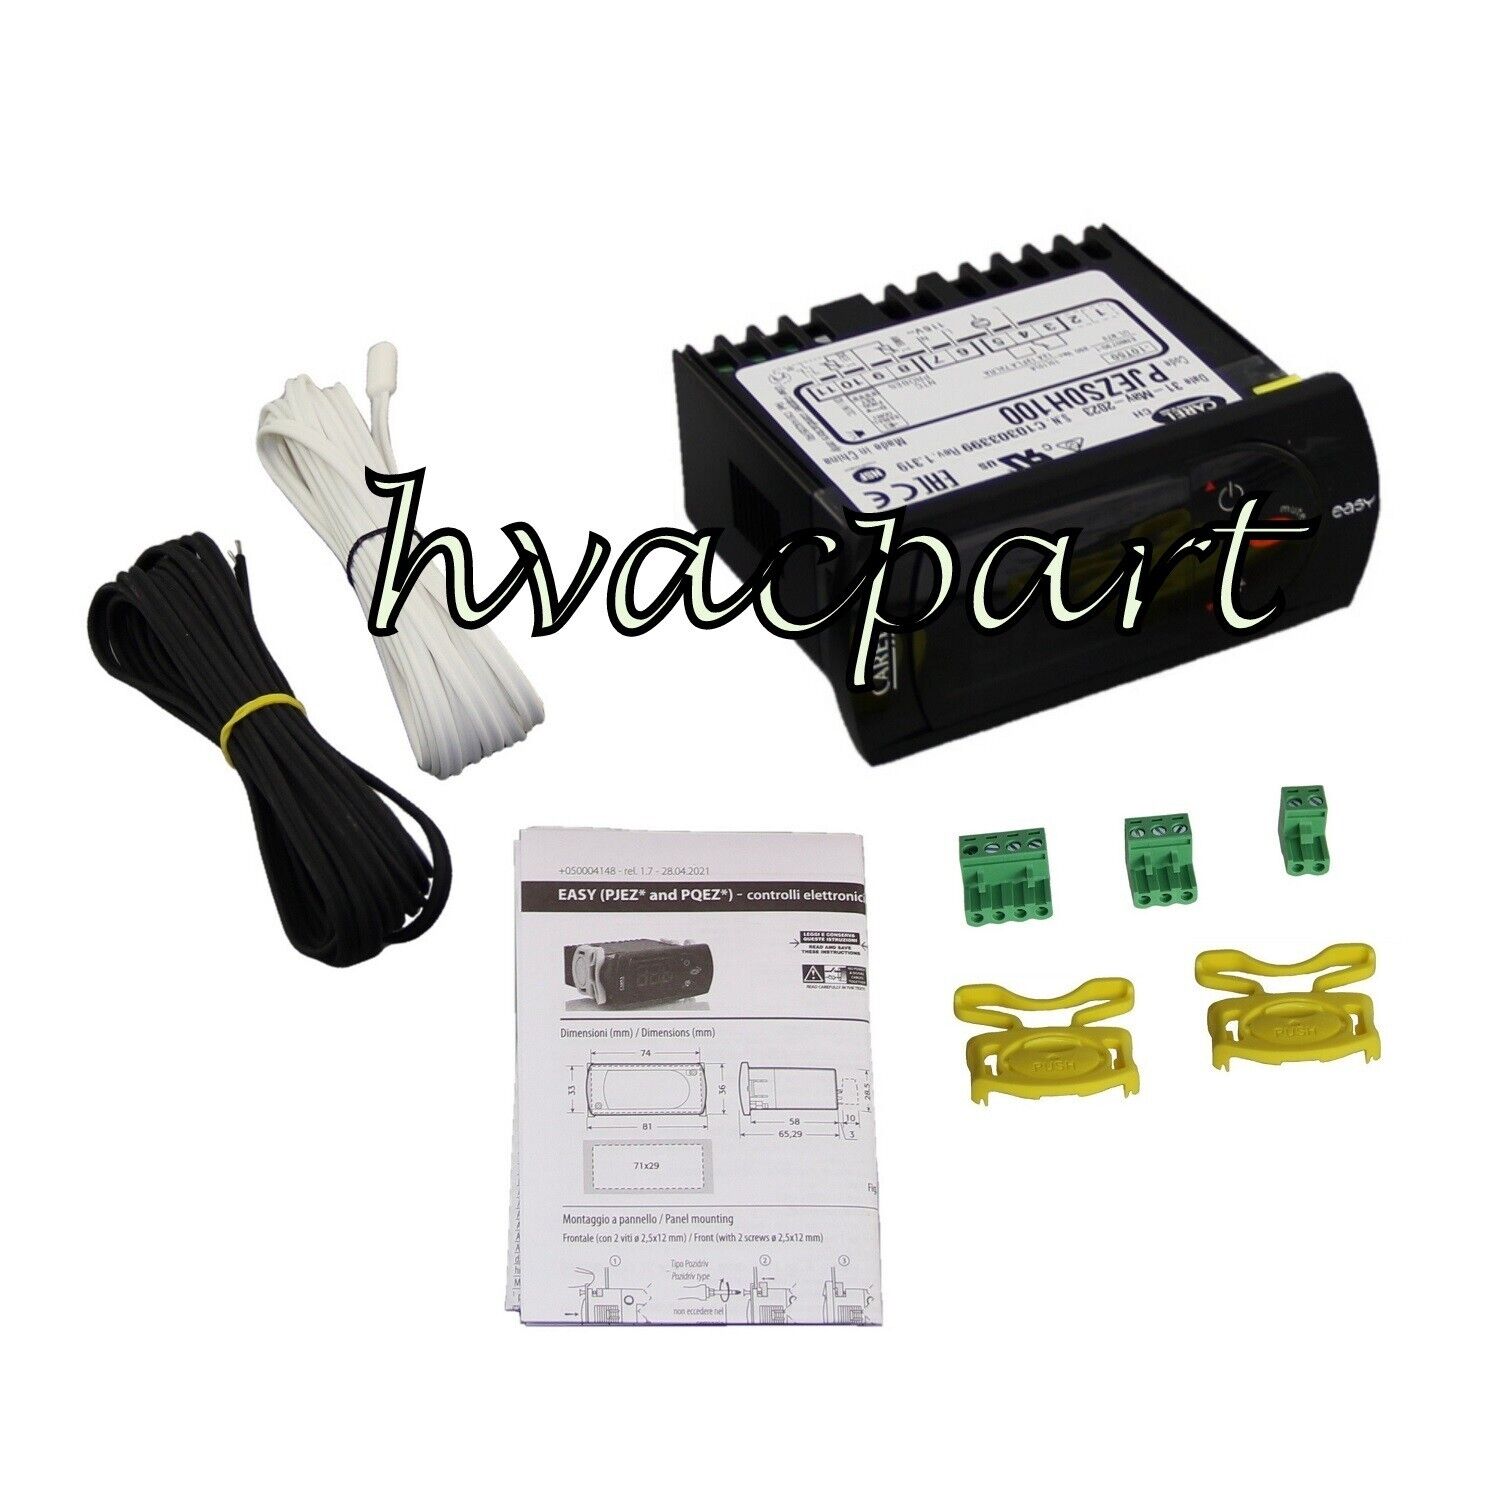 Carel Digital Temperature Controller PJEZS0H100 with probe Avantco refrigeration